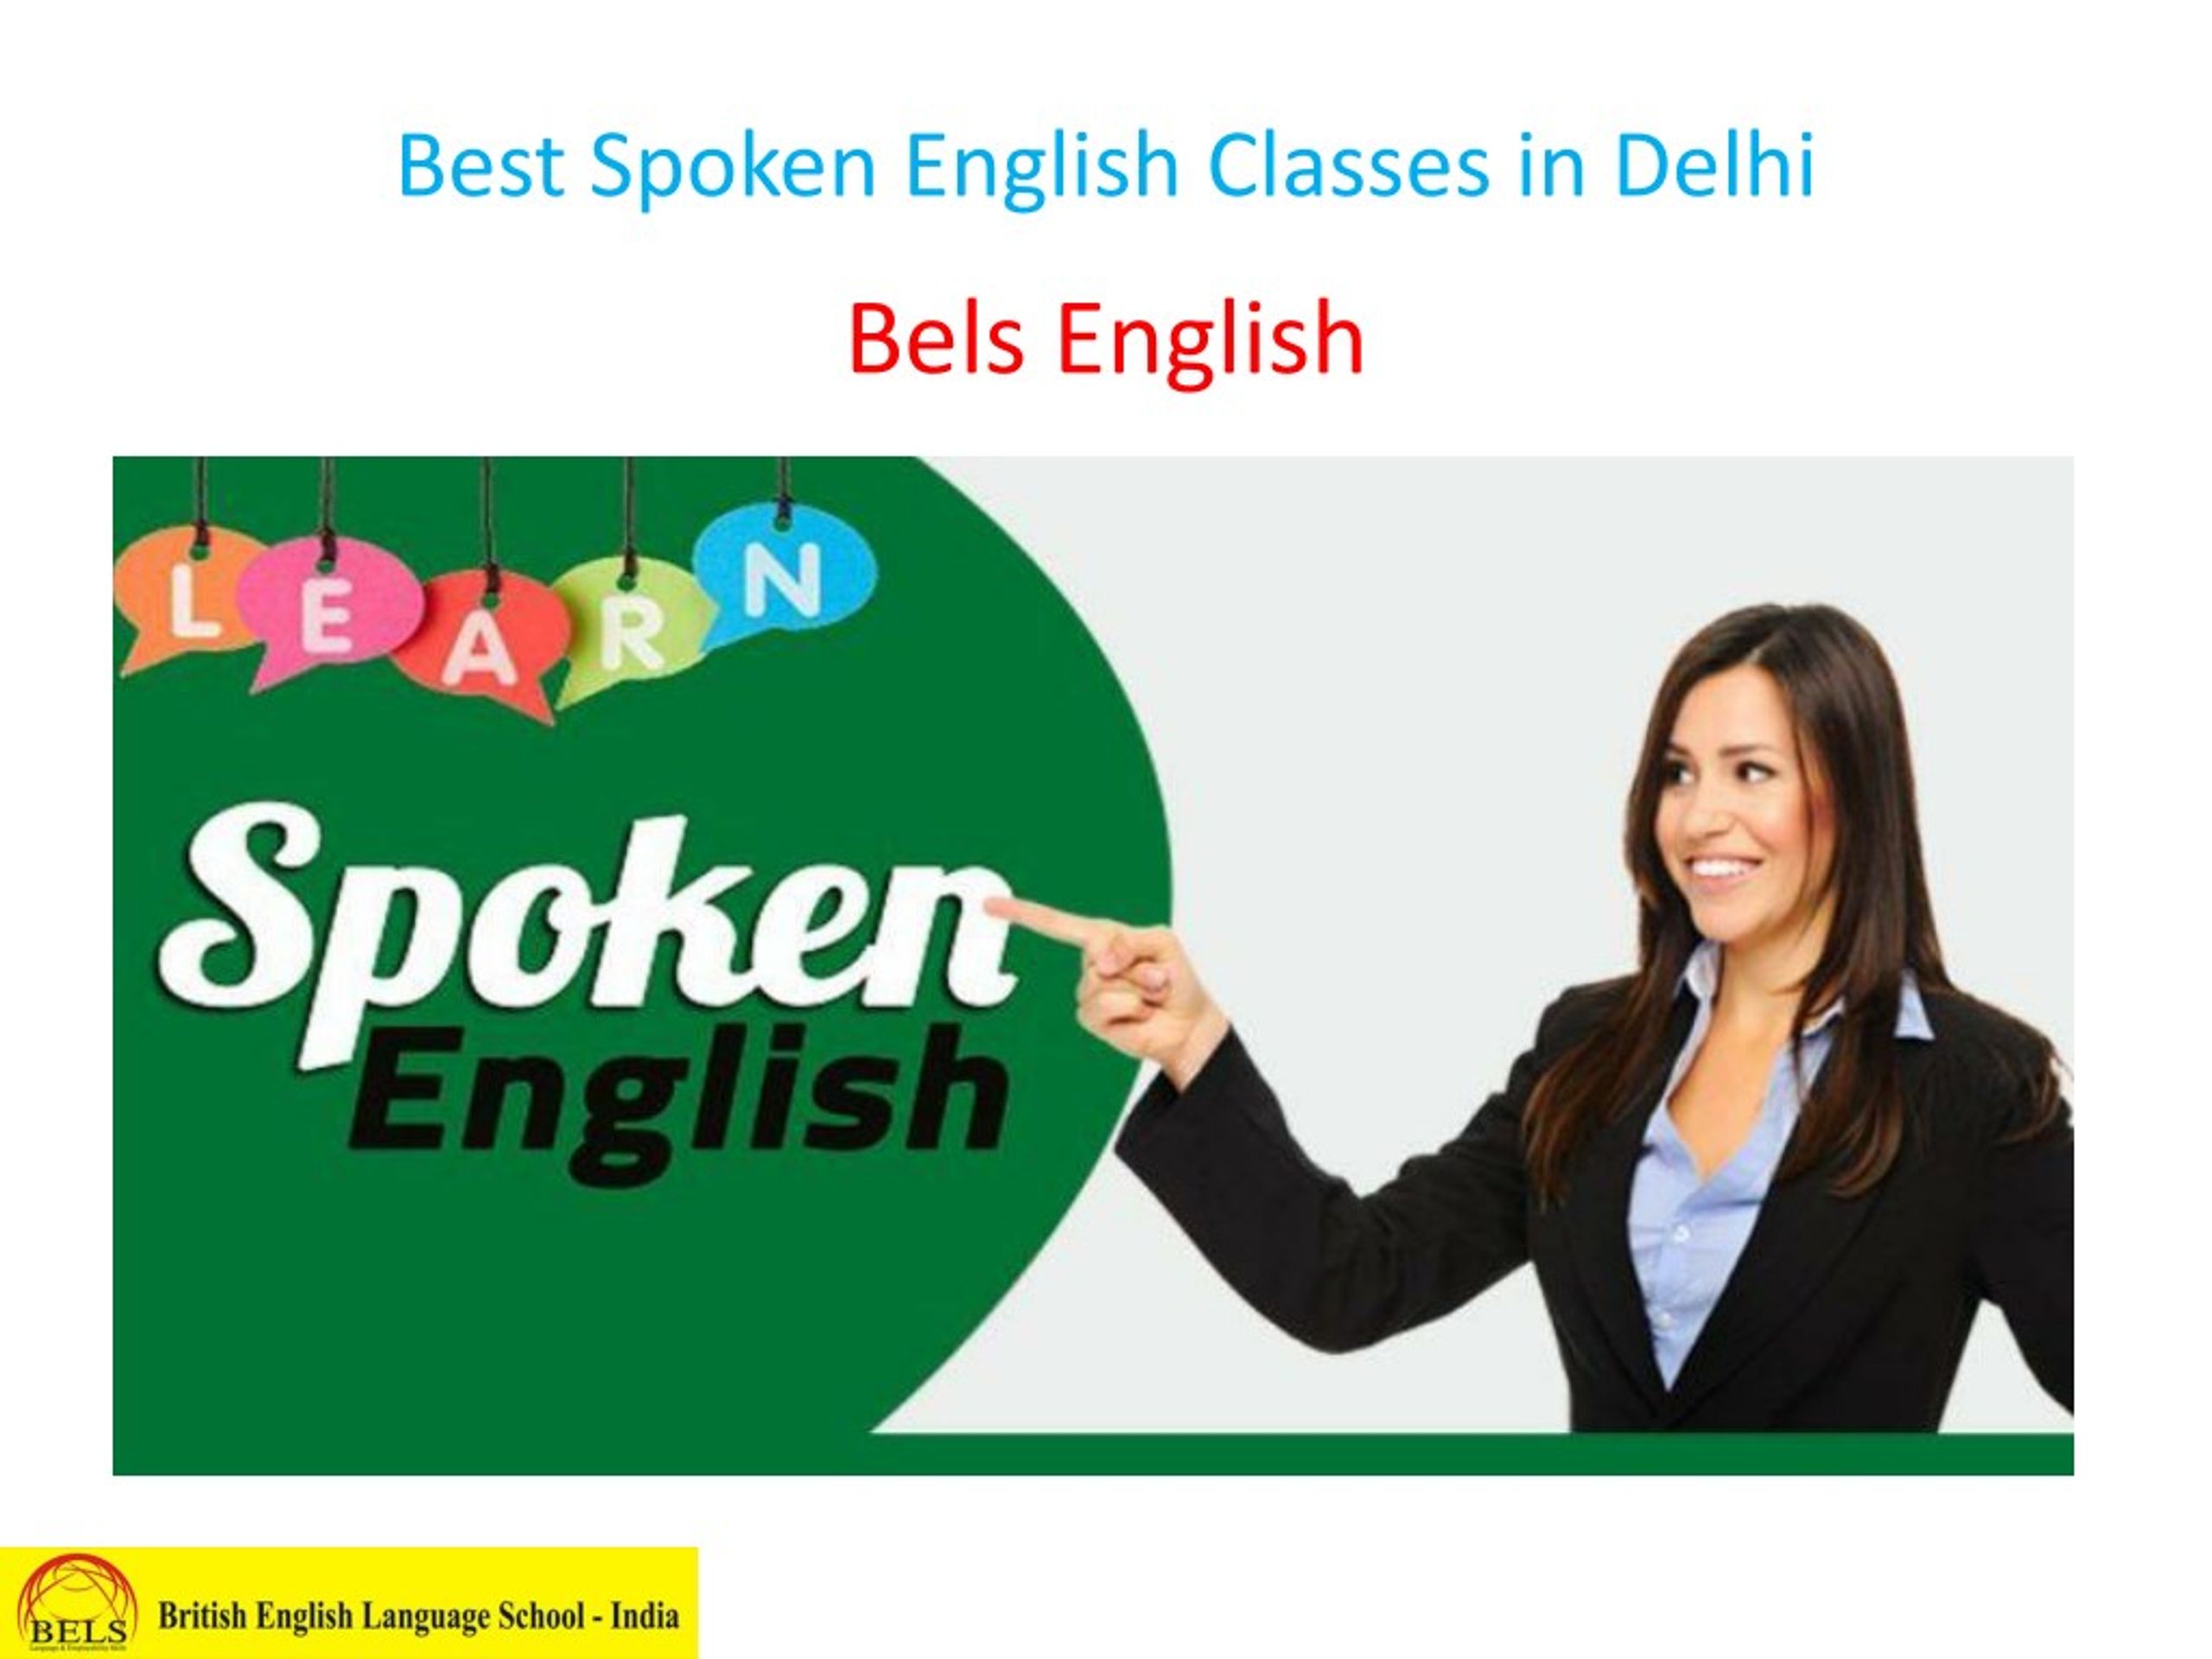 Spoken English classes. English speaking course. English Central. Centre в английском. English spoken here